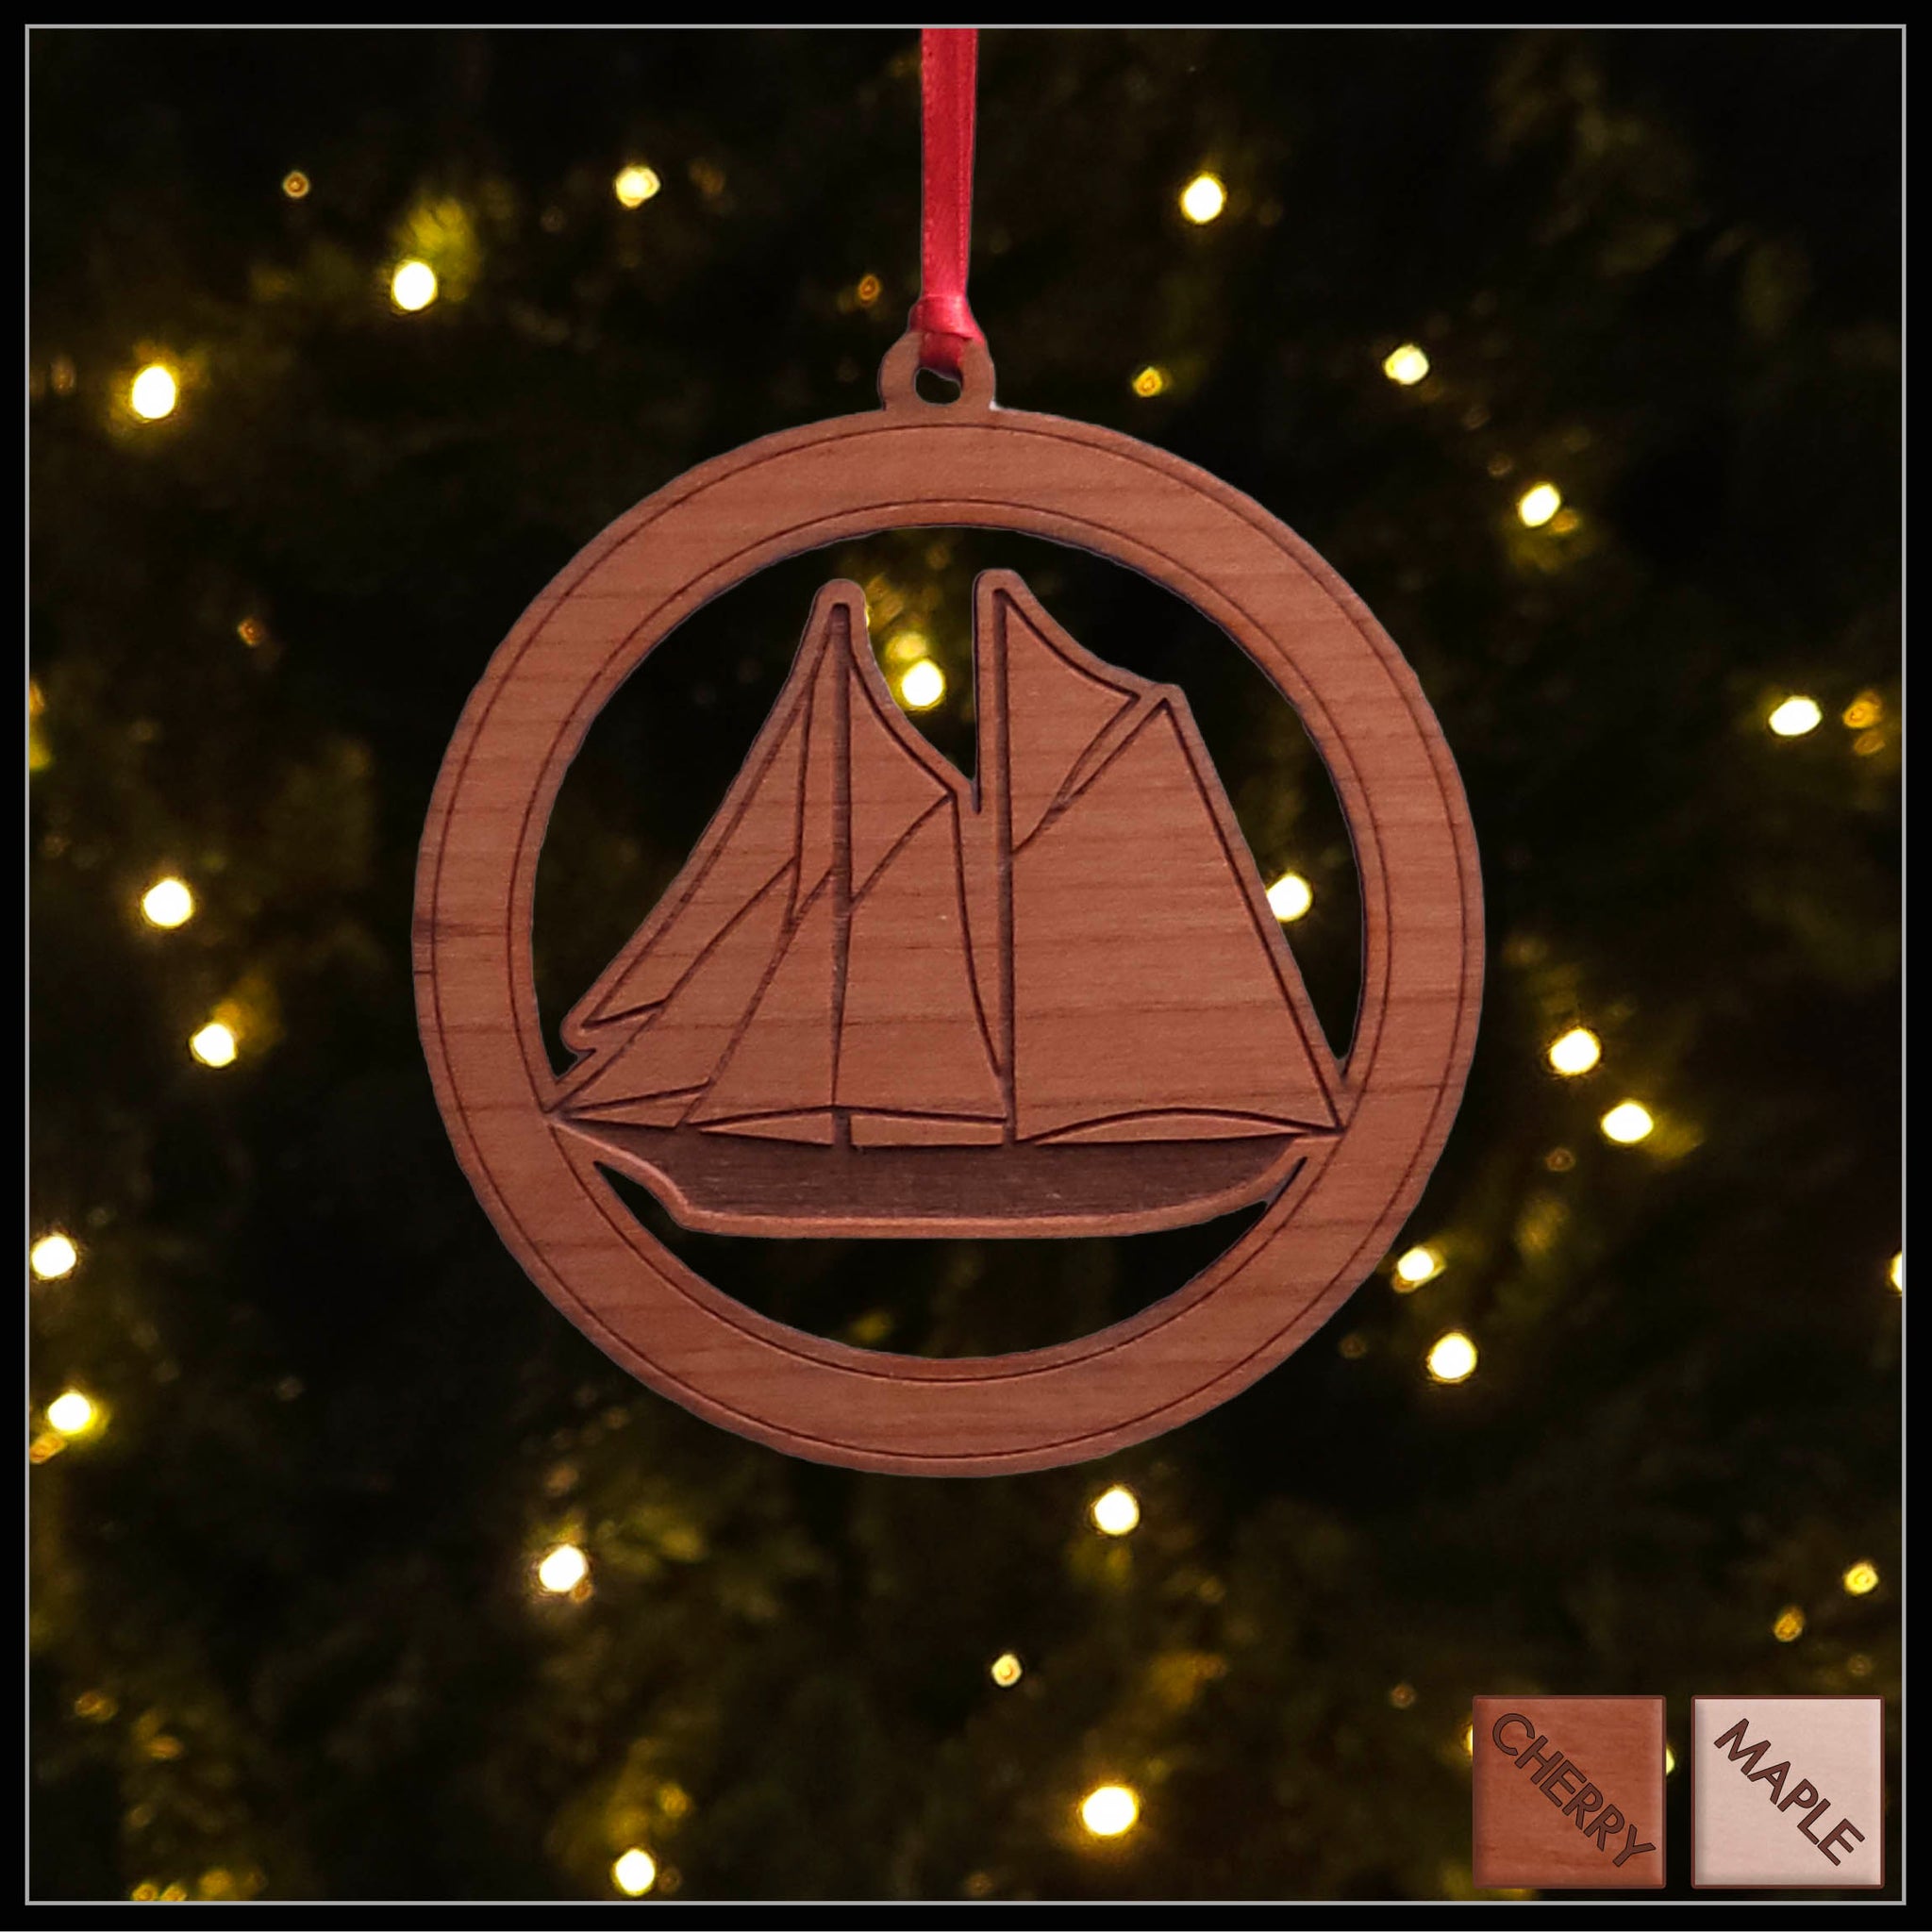 Cherry Veneer Sailing Ship Christmas tree ornament - Holiday Decor - Copyright Hues in Glass